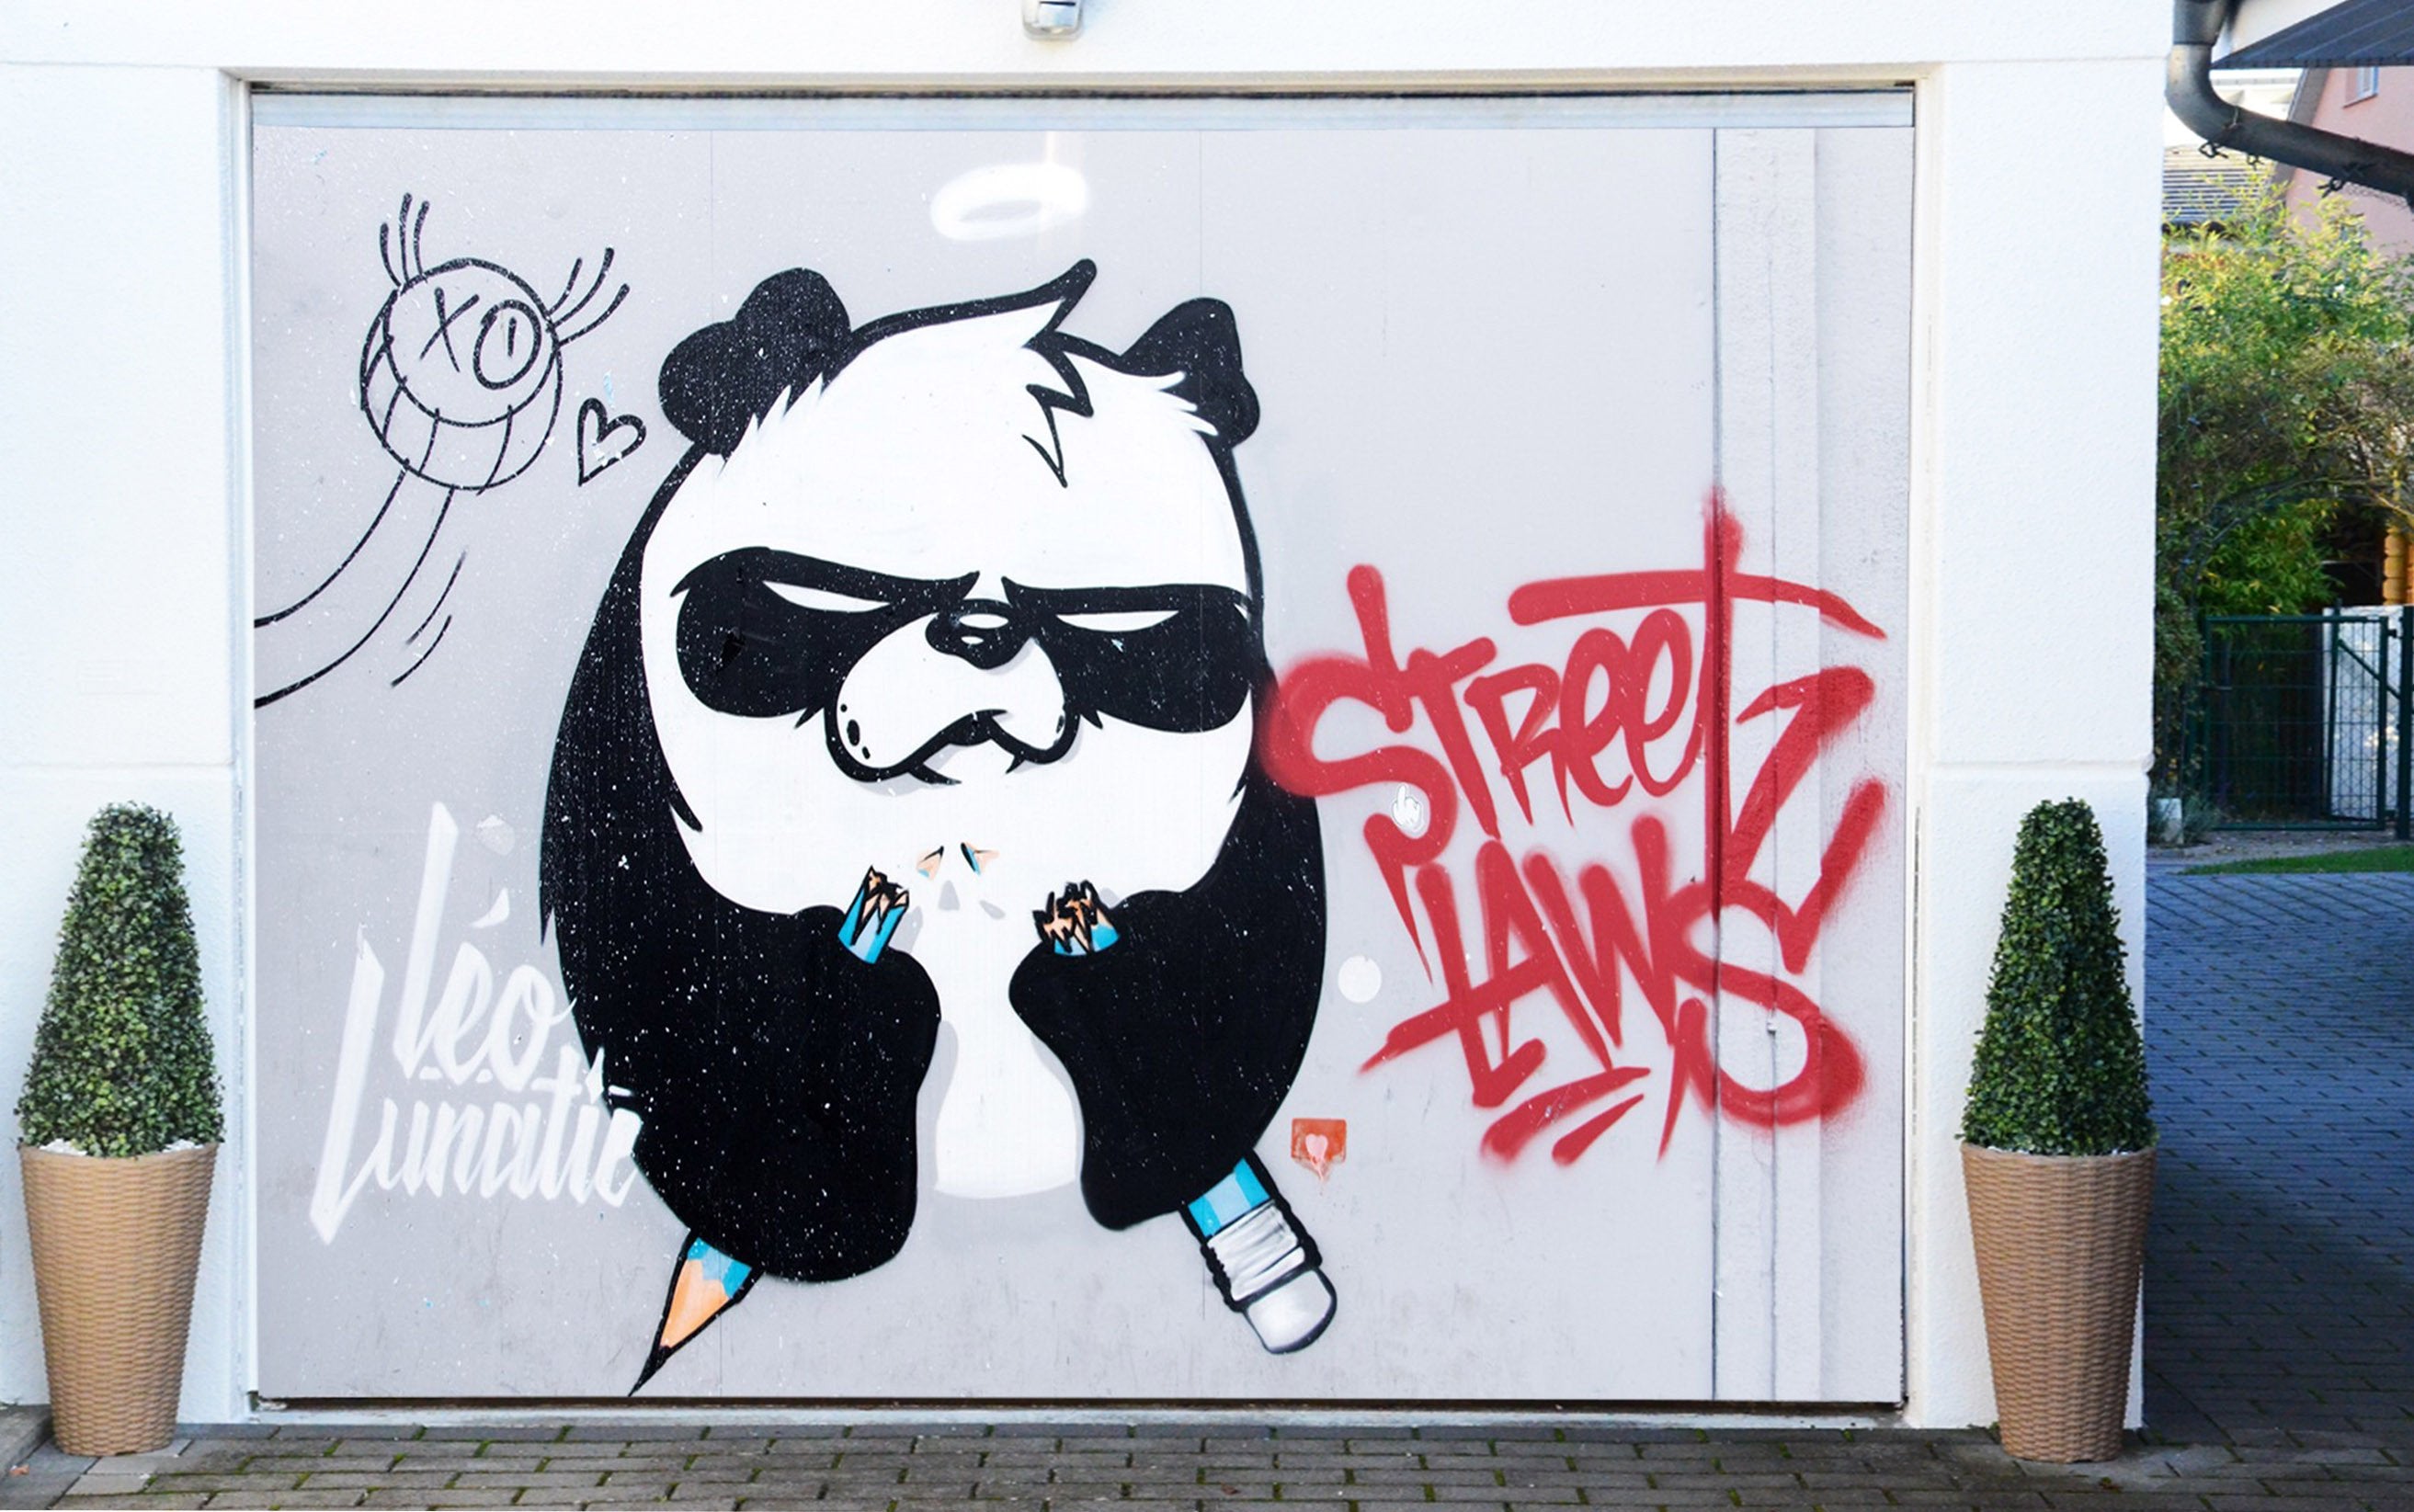 3D Graffiti Funny Bear 414 Garage Door Mural Wallpaper AJ Wallpaper 